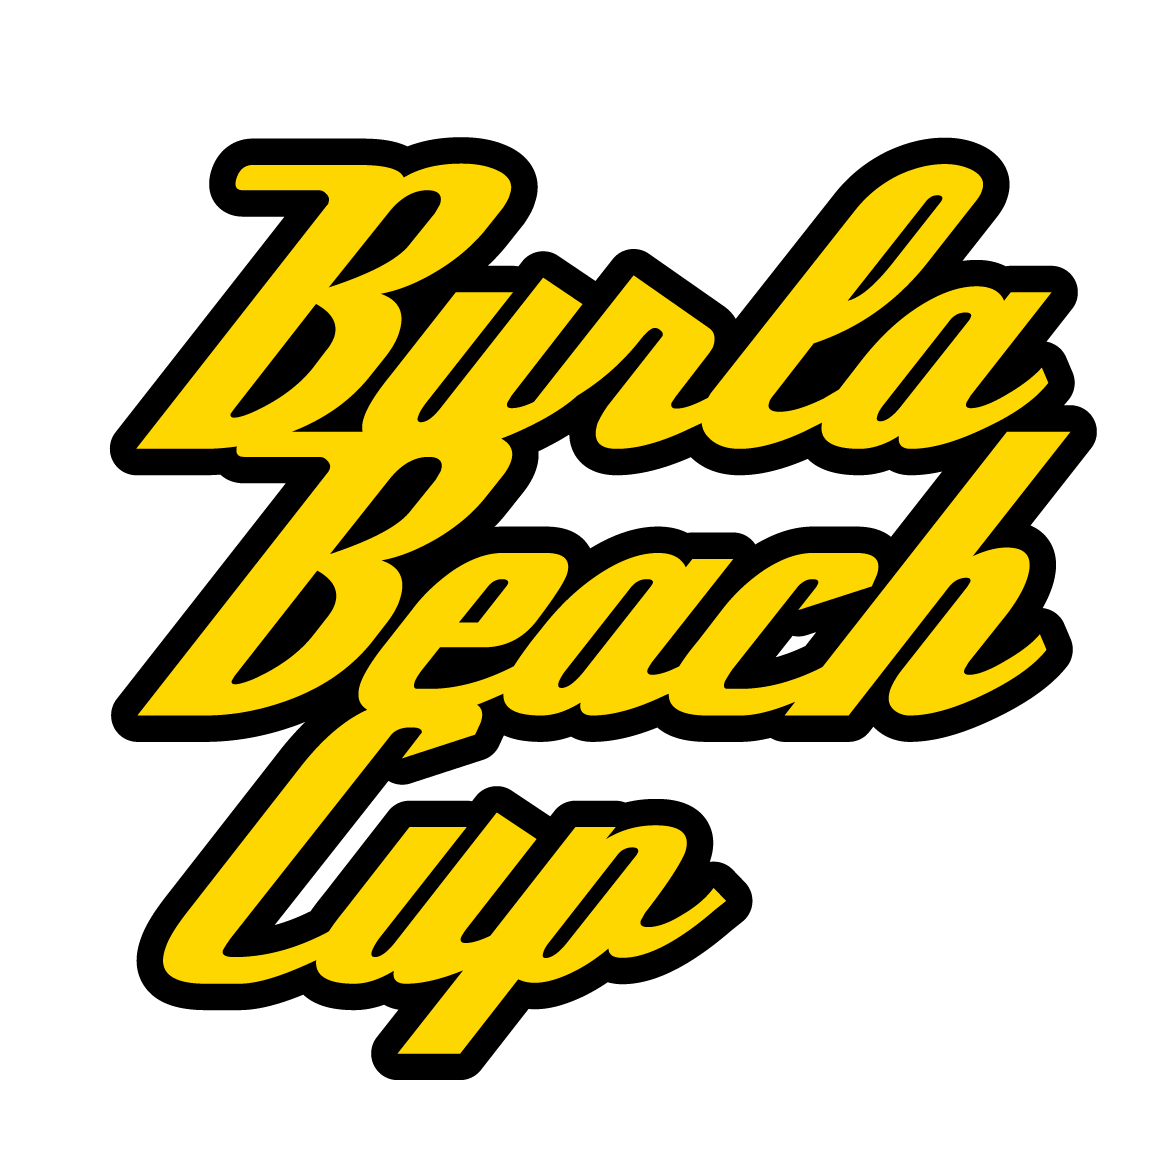 burla beach cup